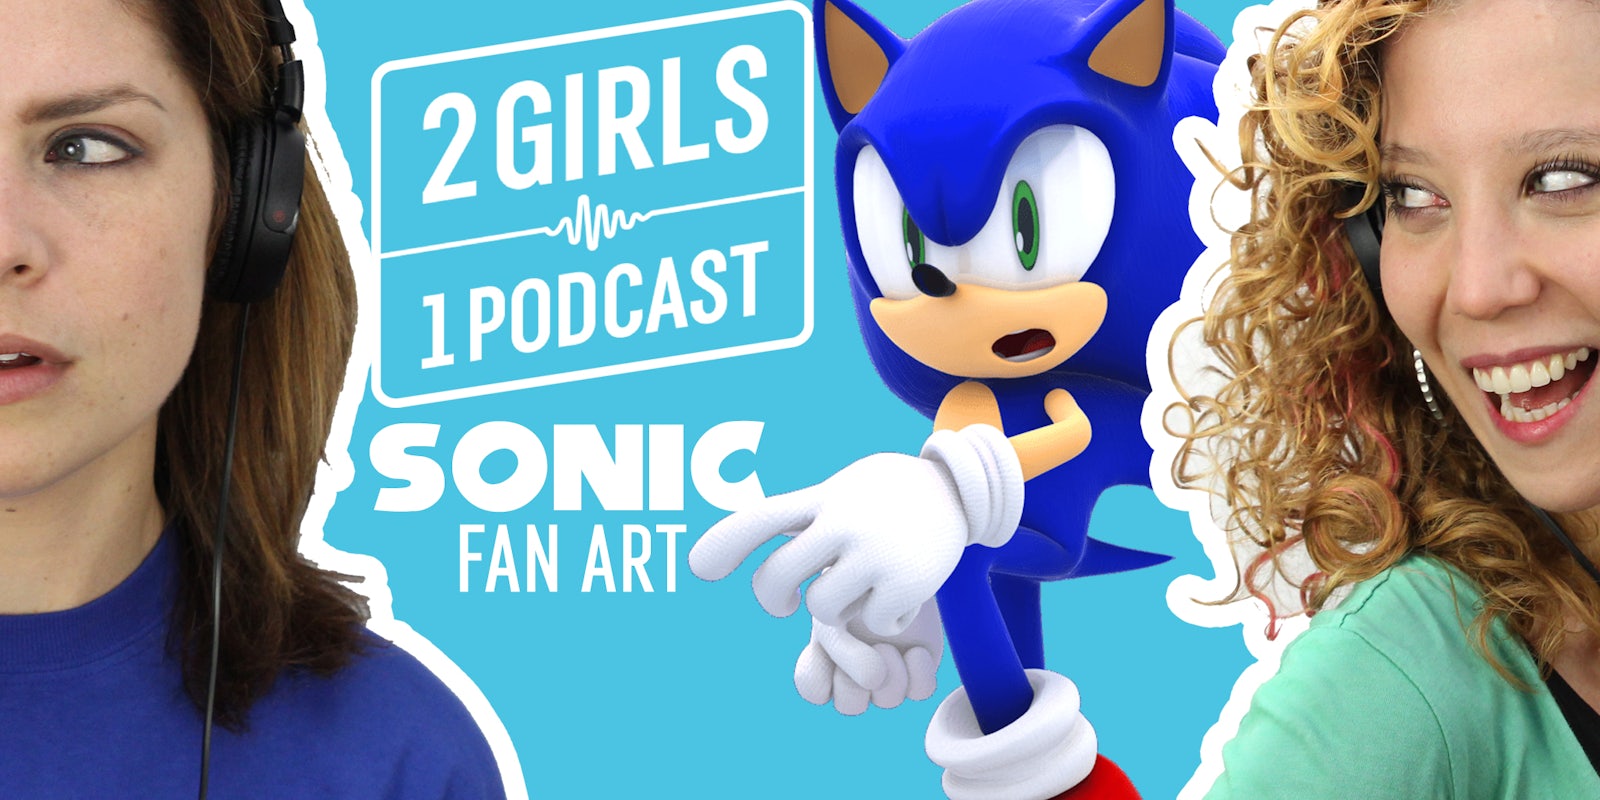 2 Girls 1 Podcast SONIC